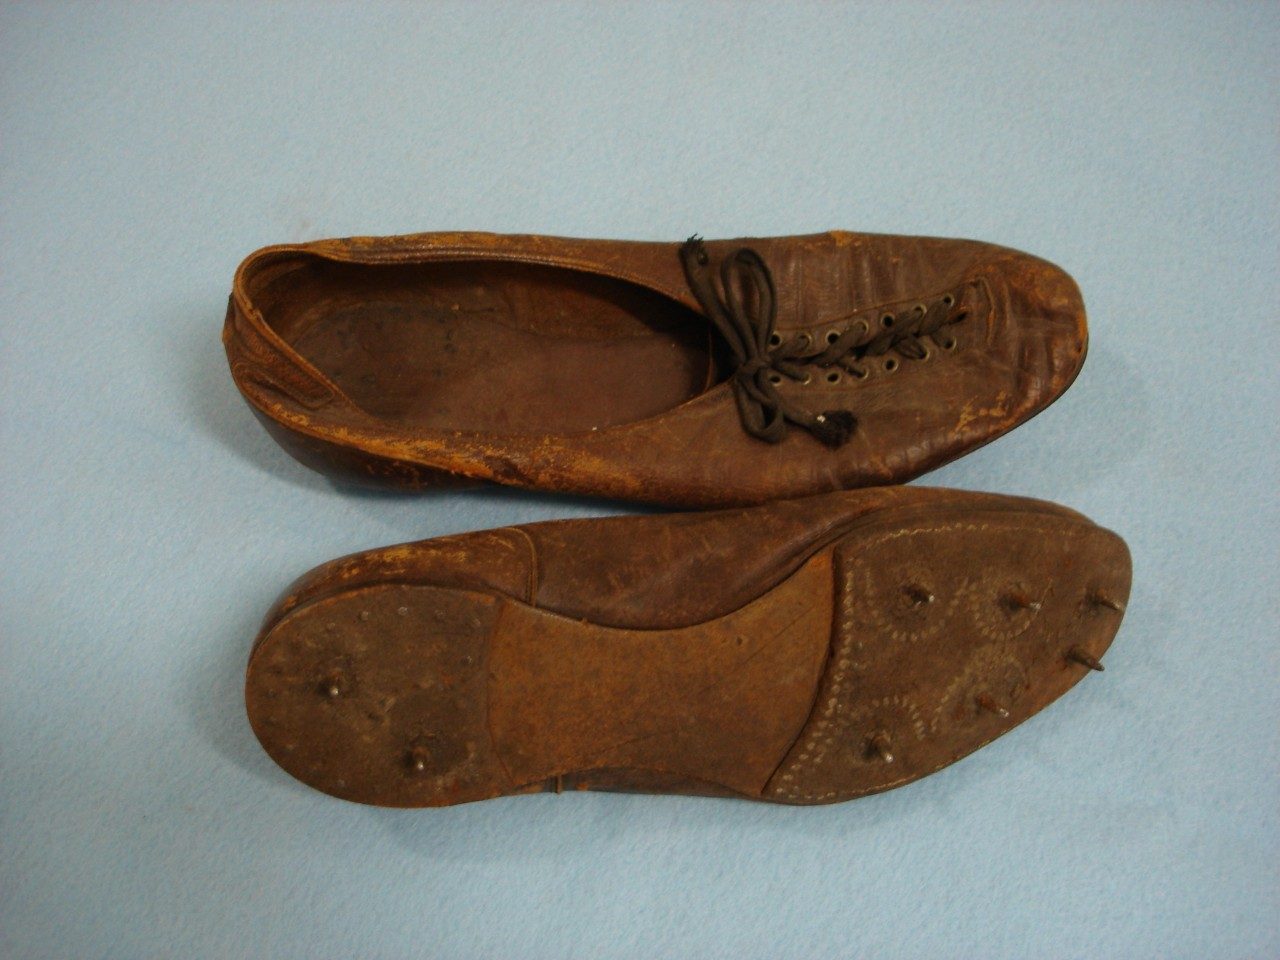 Track Shoes Worn by Eugene Schmitt, Columbia University Track Athlete, 1914-1915 (University Museum photo, click on image to enlarge)